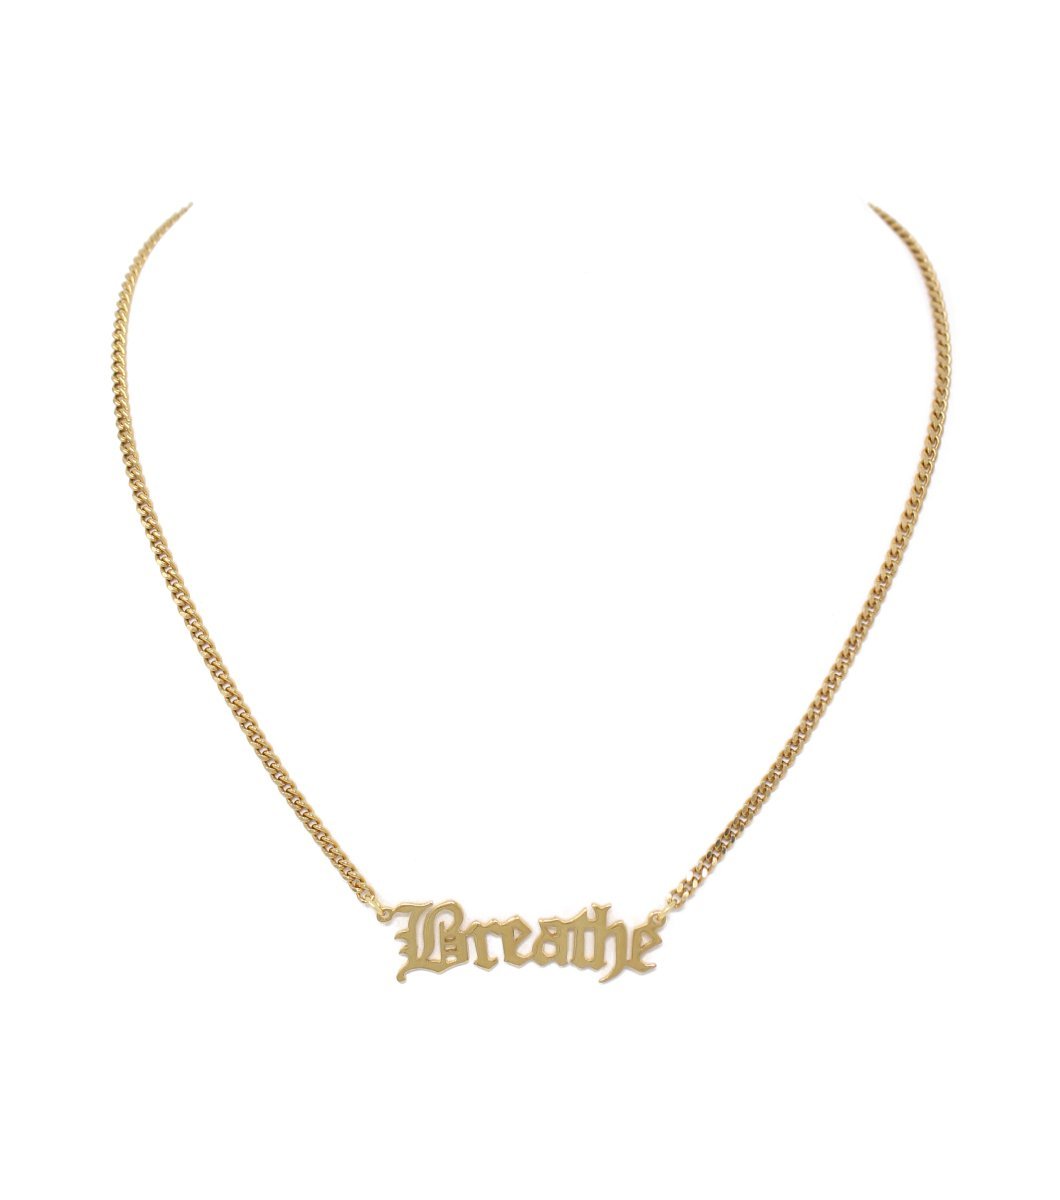 One Self reminder Breathe necklace - Laura Cantu Jewelry - Mx